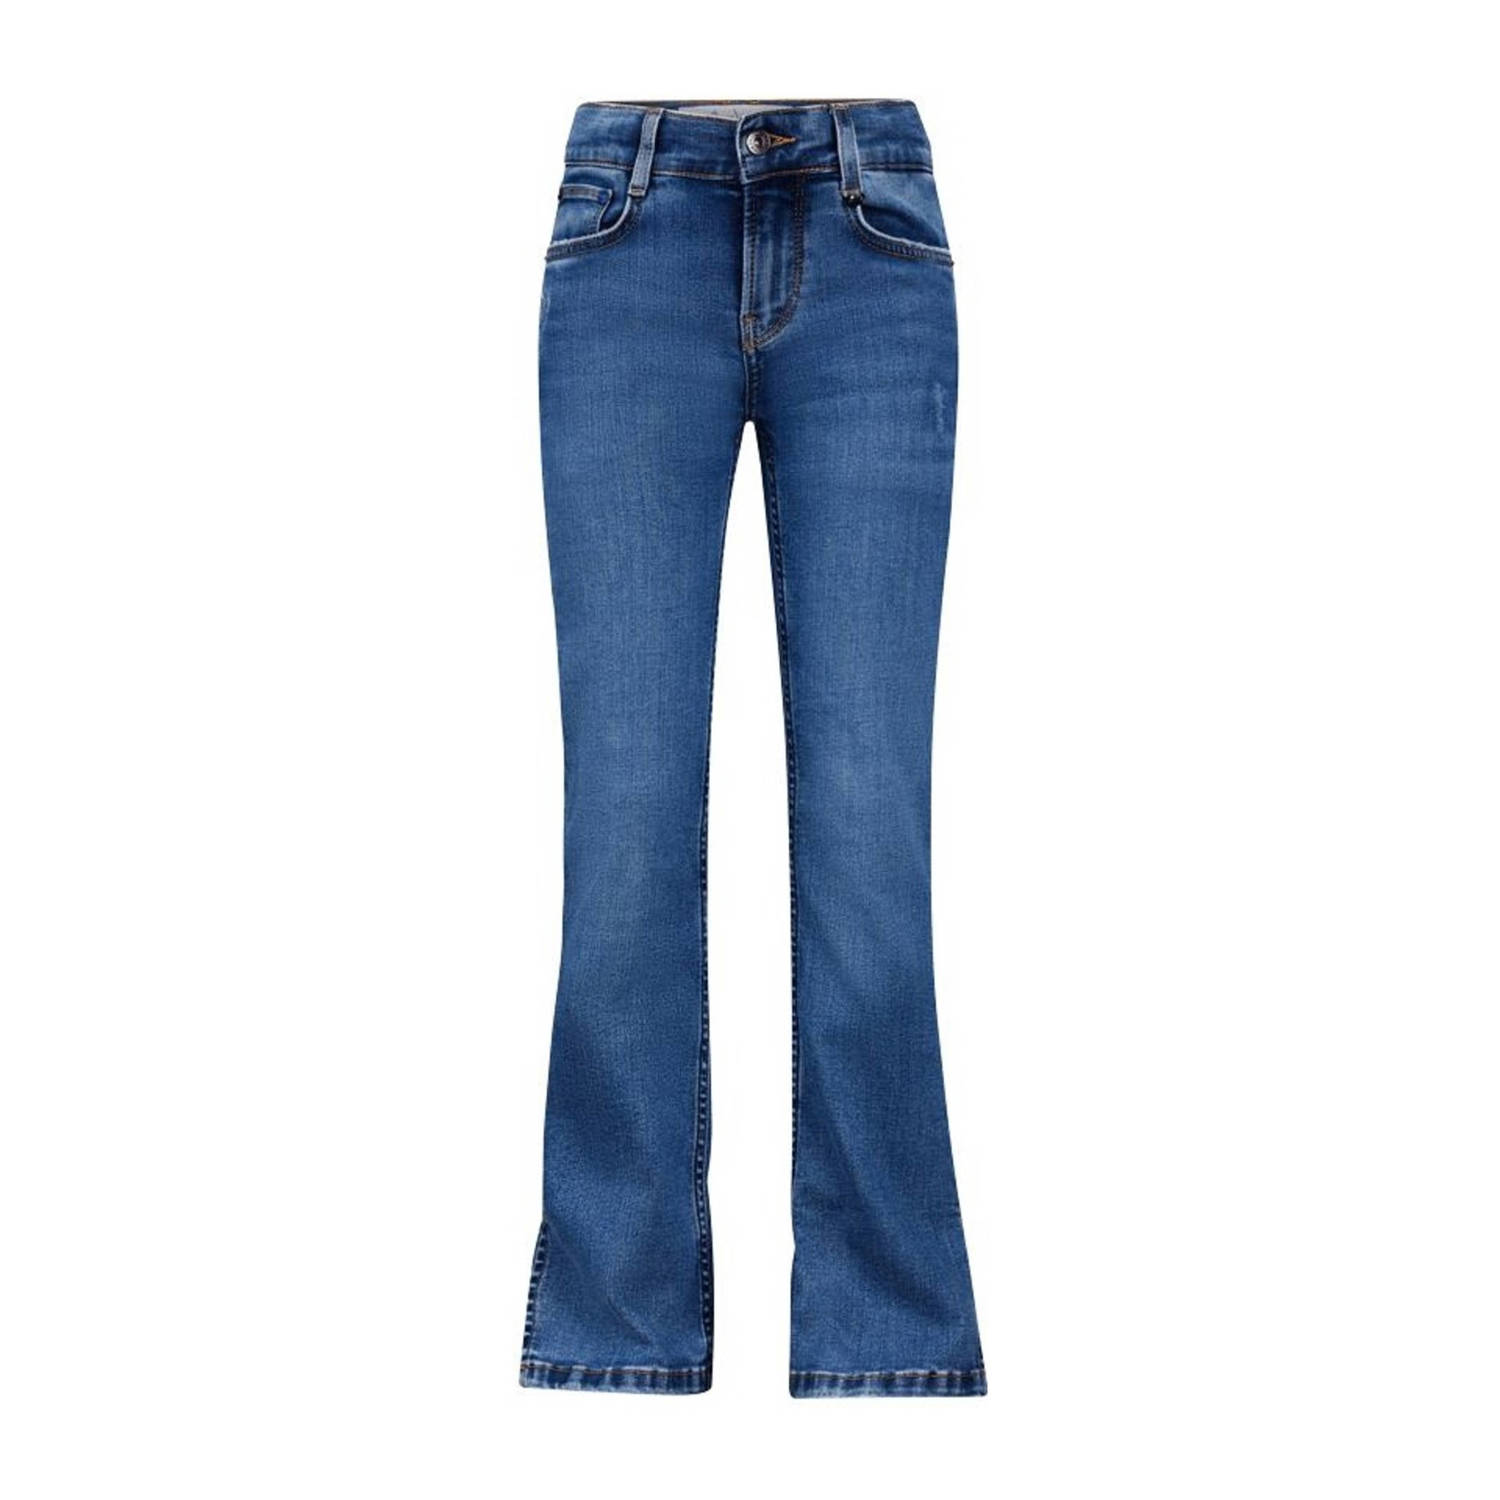 Retour Jeans flared jeans Anouck Indigo dark blue denim Blauw Meisjes Stretchdenim 116